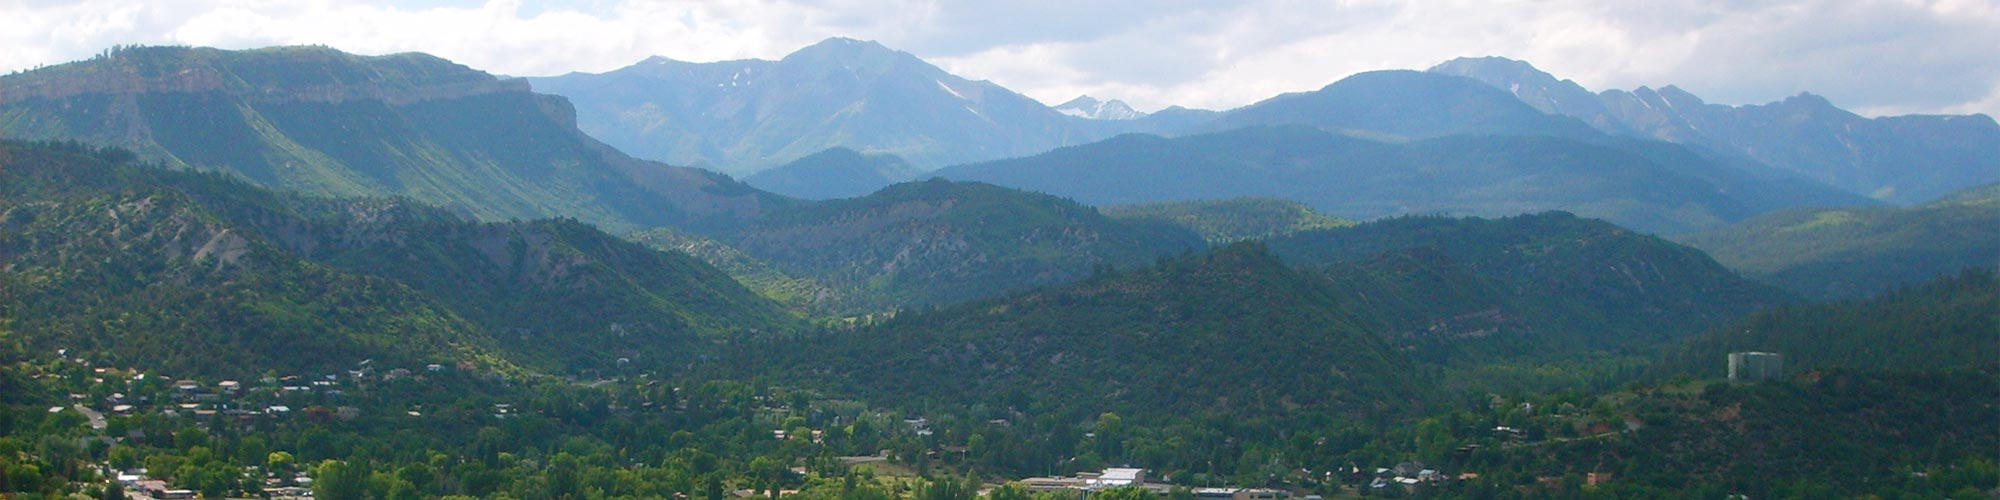 Government Services in Durango, Colorado